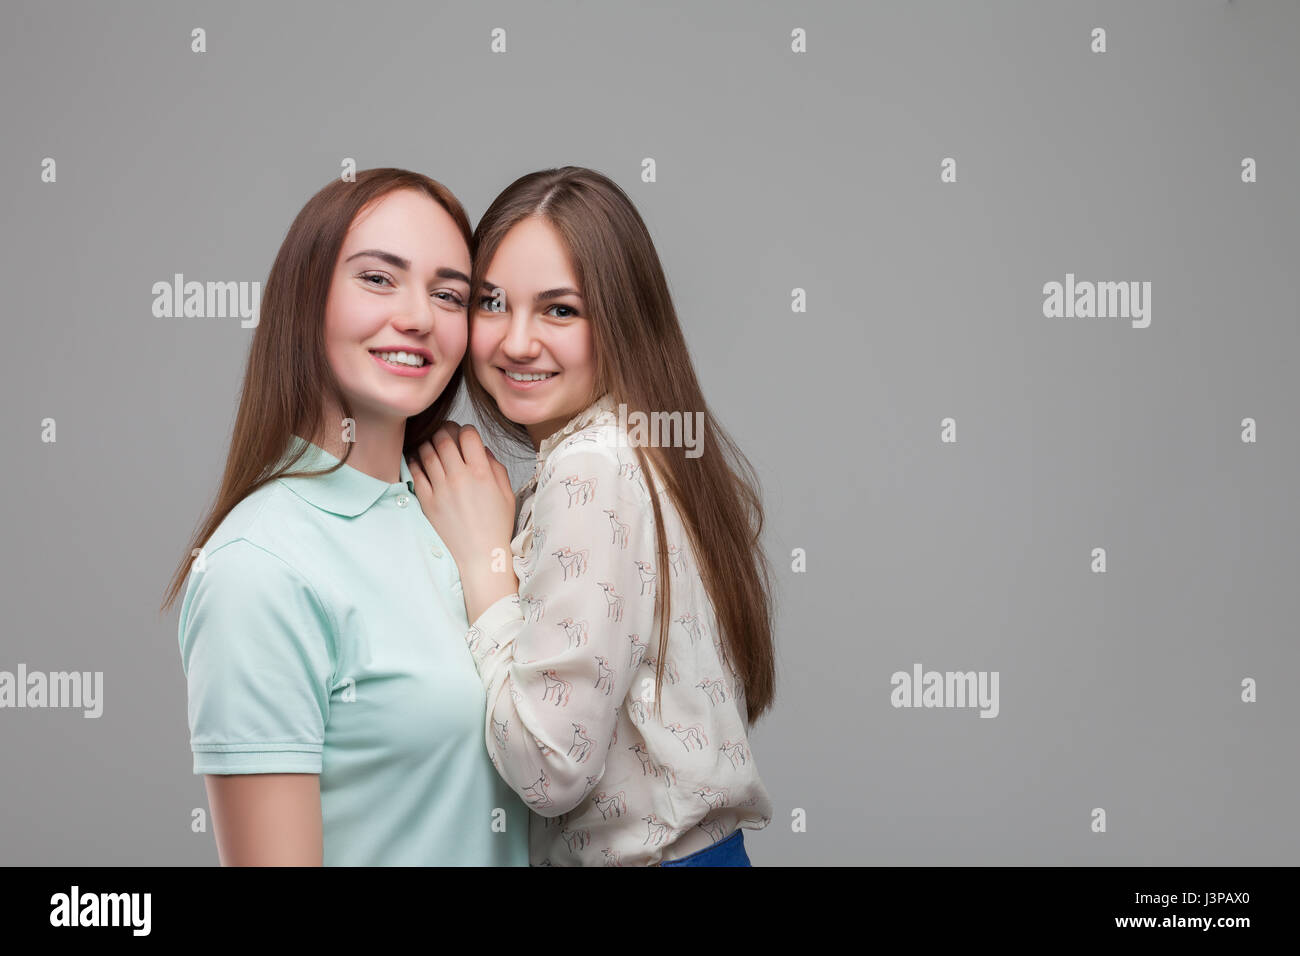 Two women hugs together, studio photo shoot. Female friendship Stock Photo